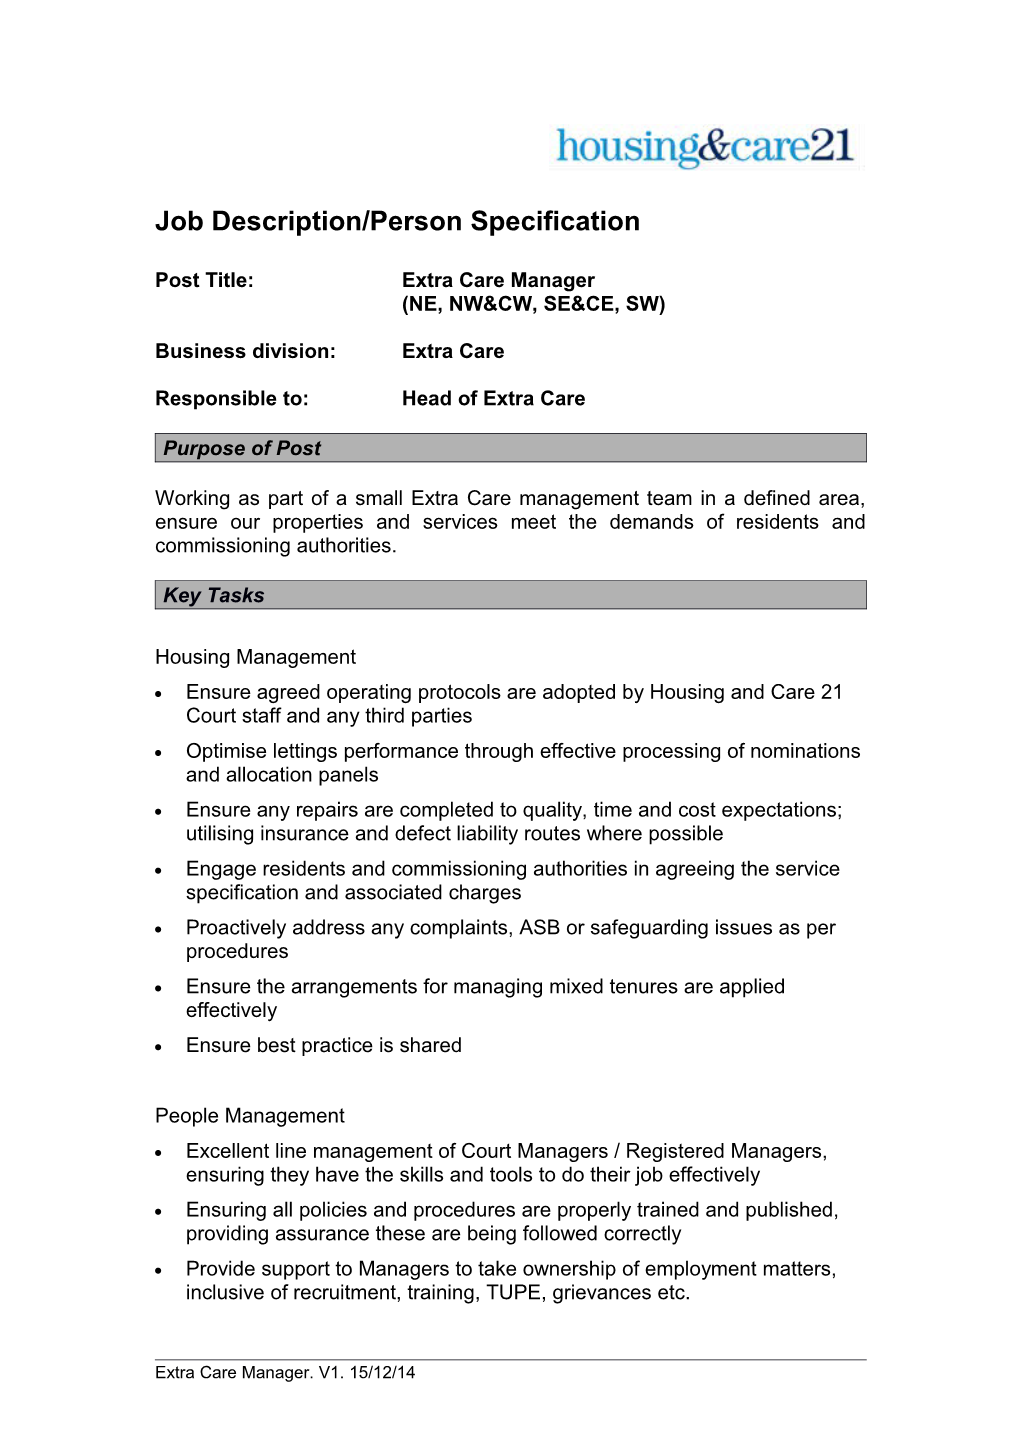 Job Description/Person Specification s4